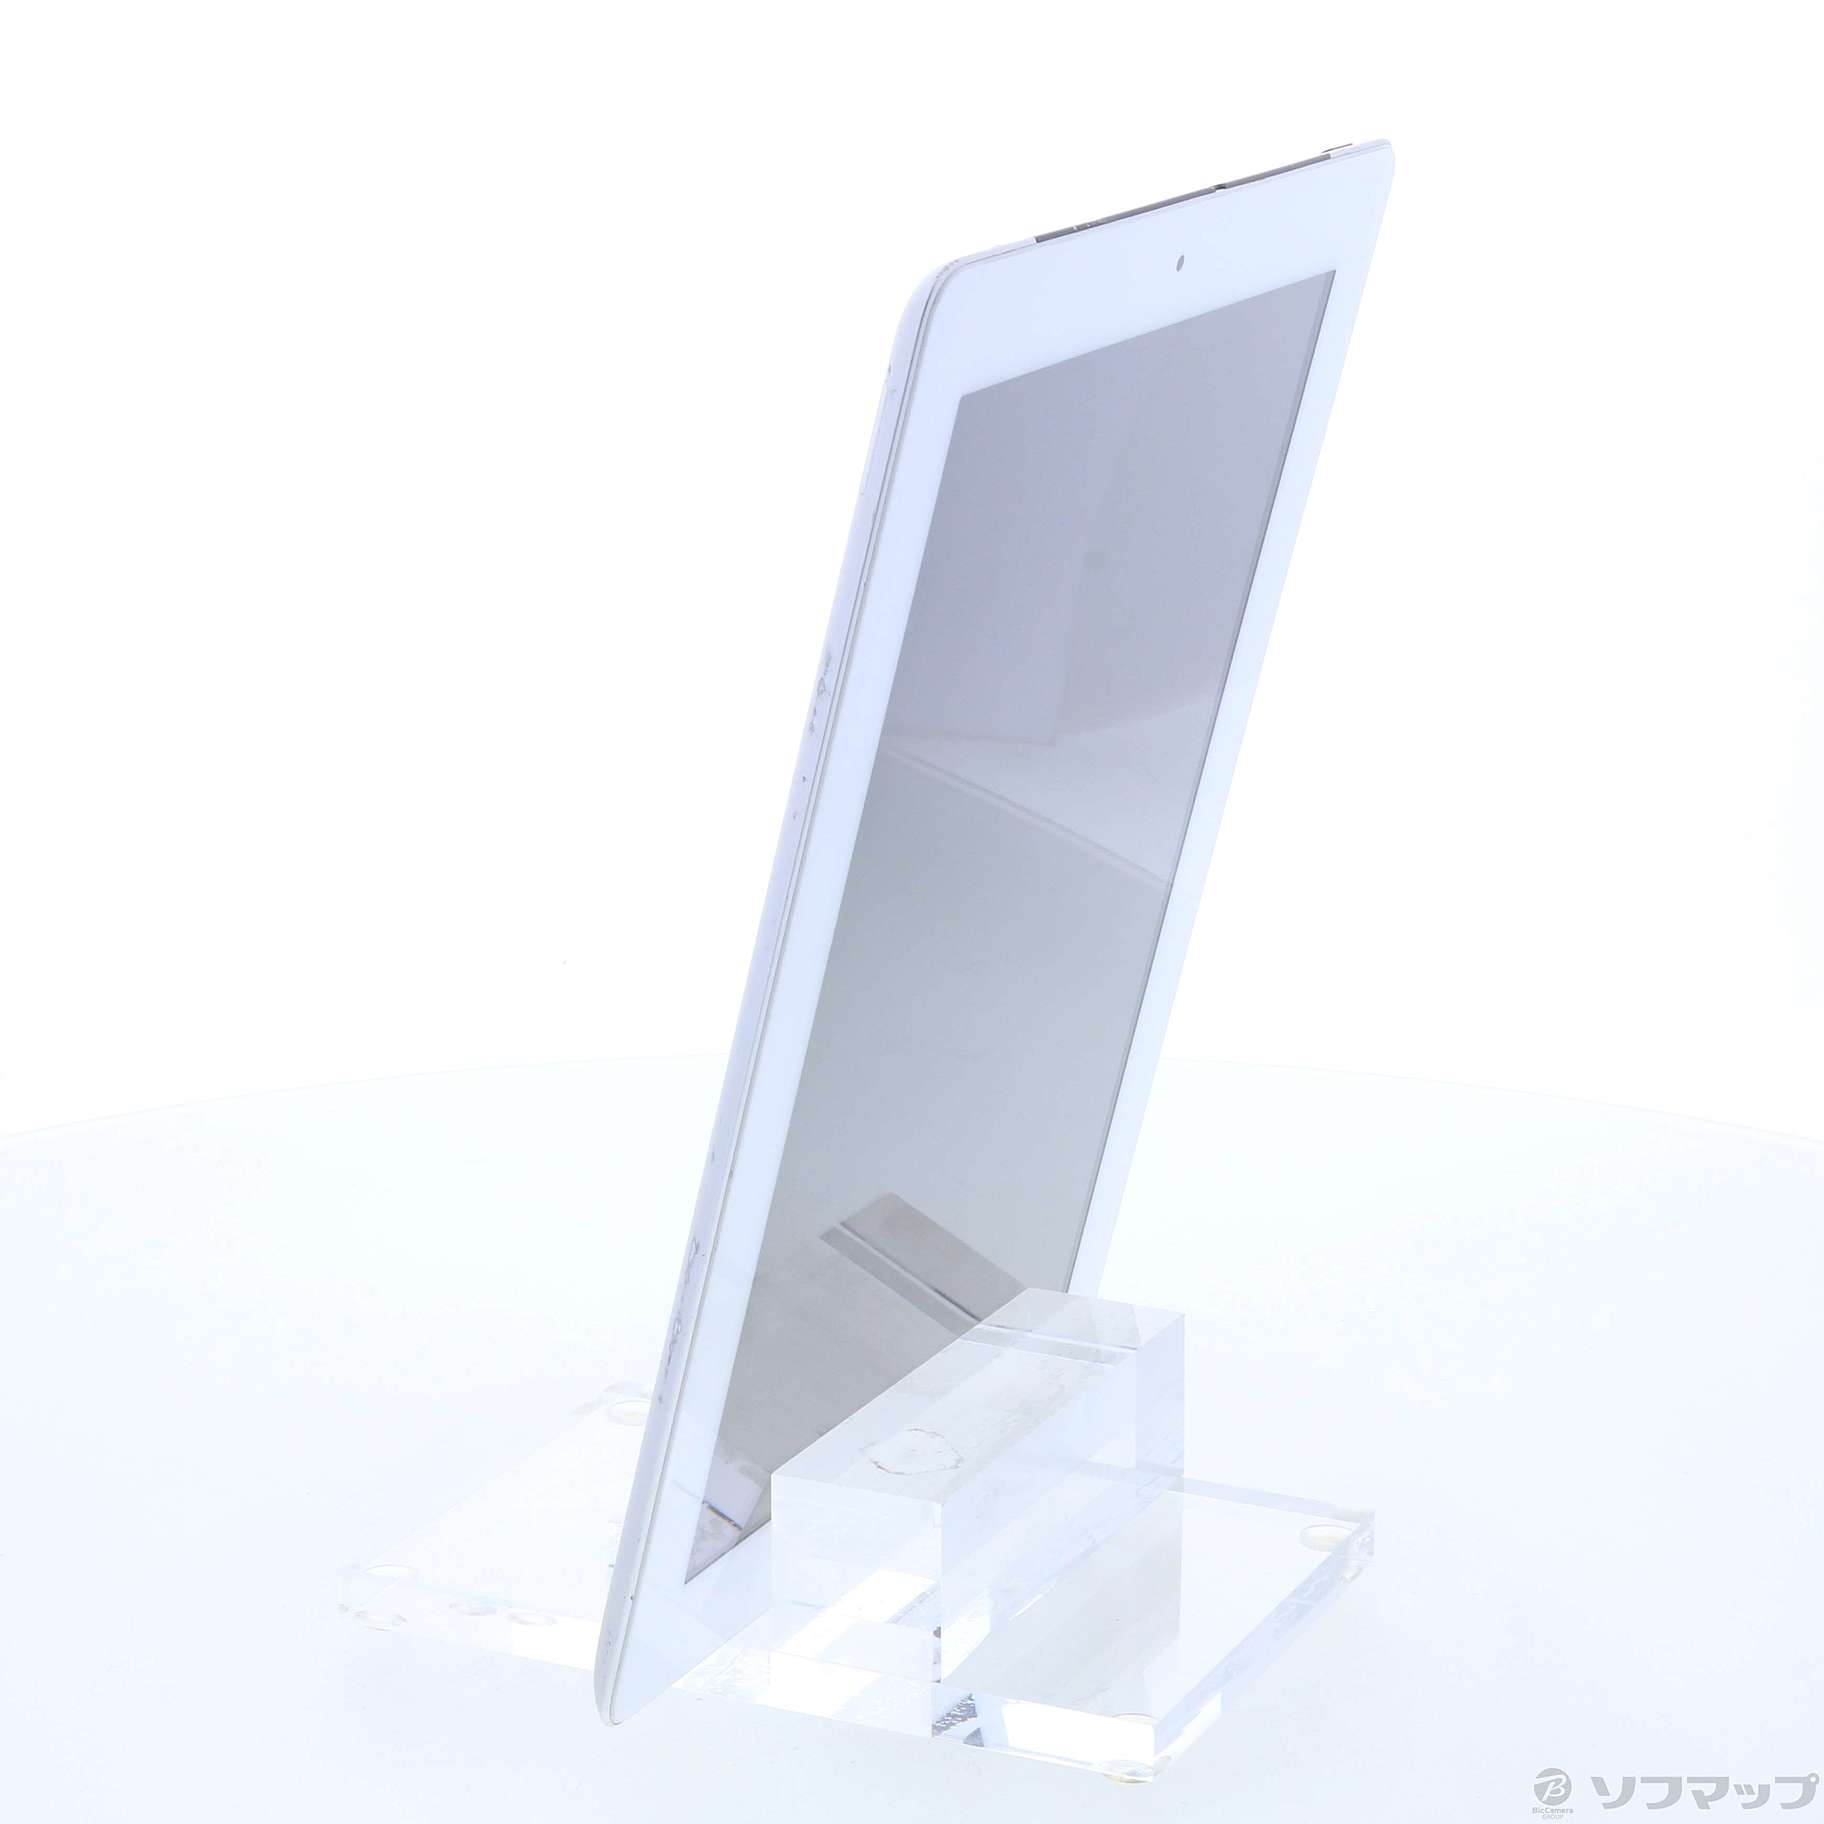 848 SoftBank Apple iPad2 64GB シルバー